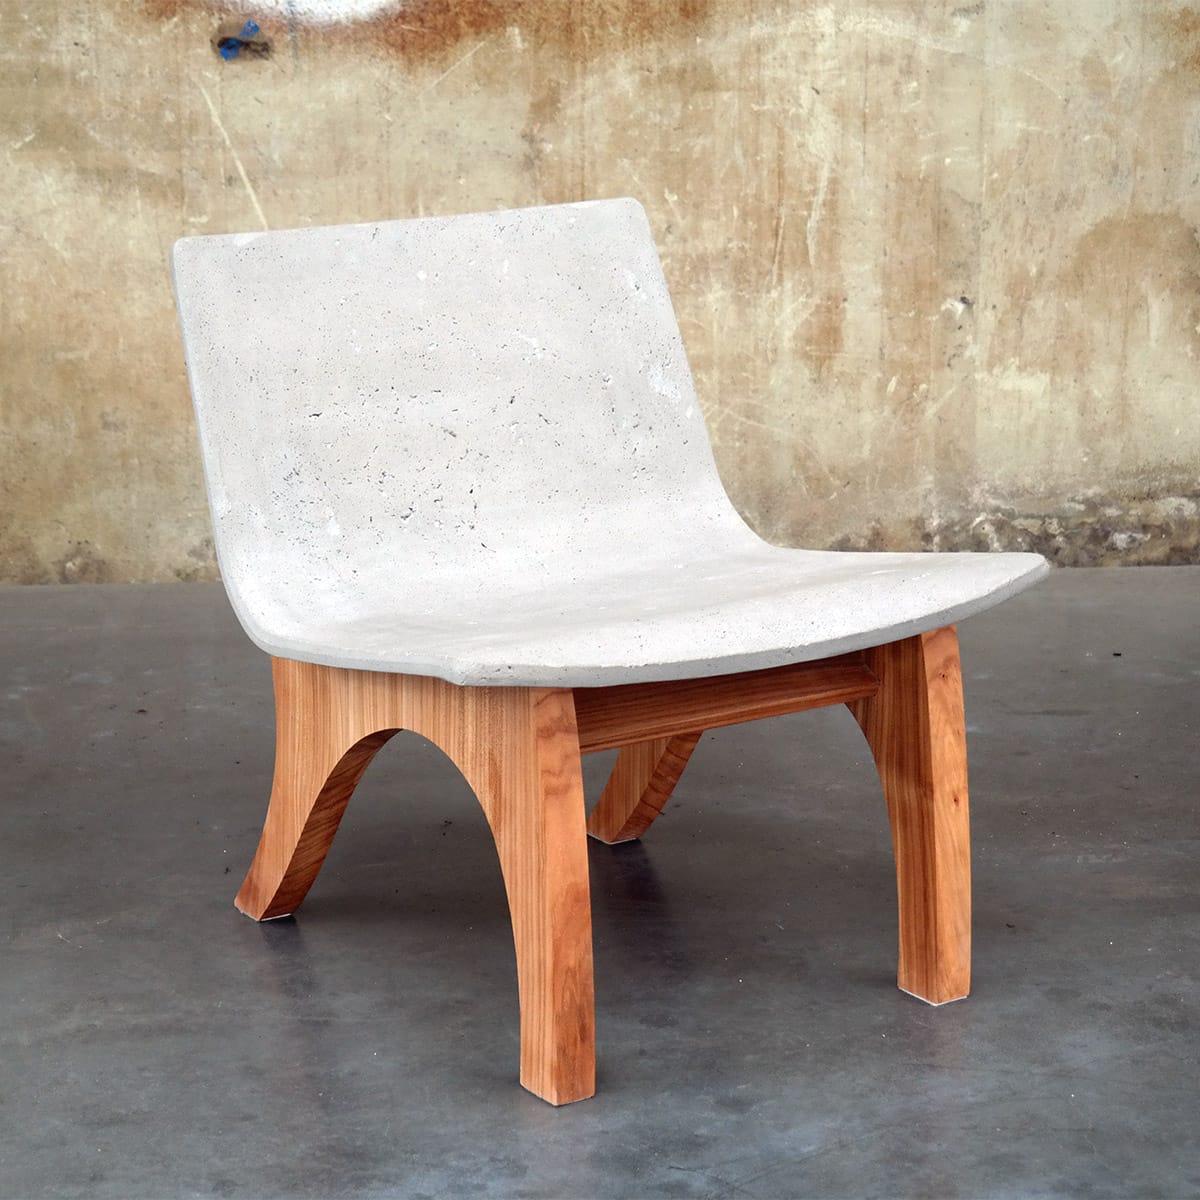 Morgan-concrete-chair-front